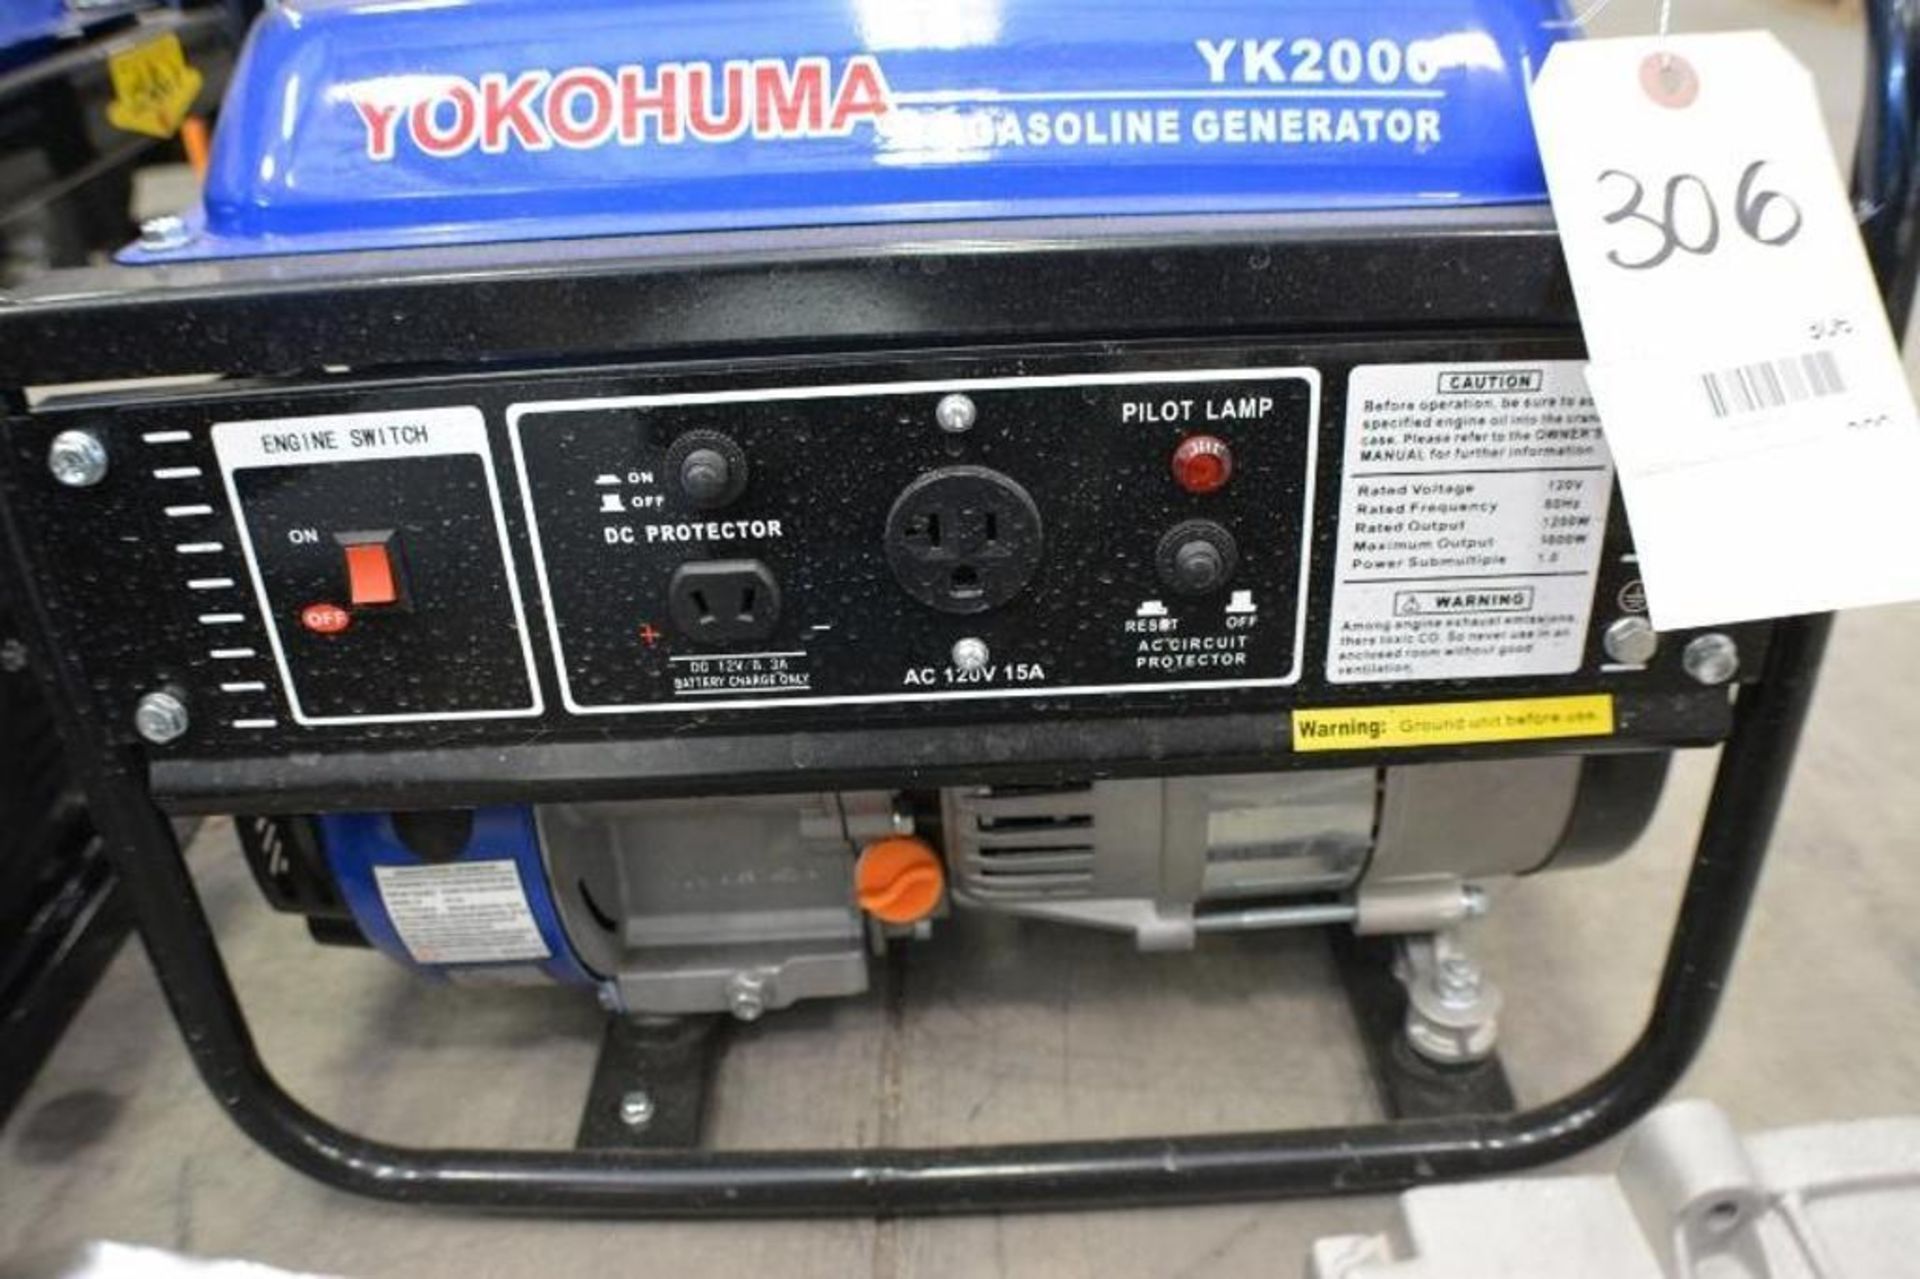 2000Watts Gasoline Generator 2.5HP 120V by Yokohuma - Image 2 of 4